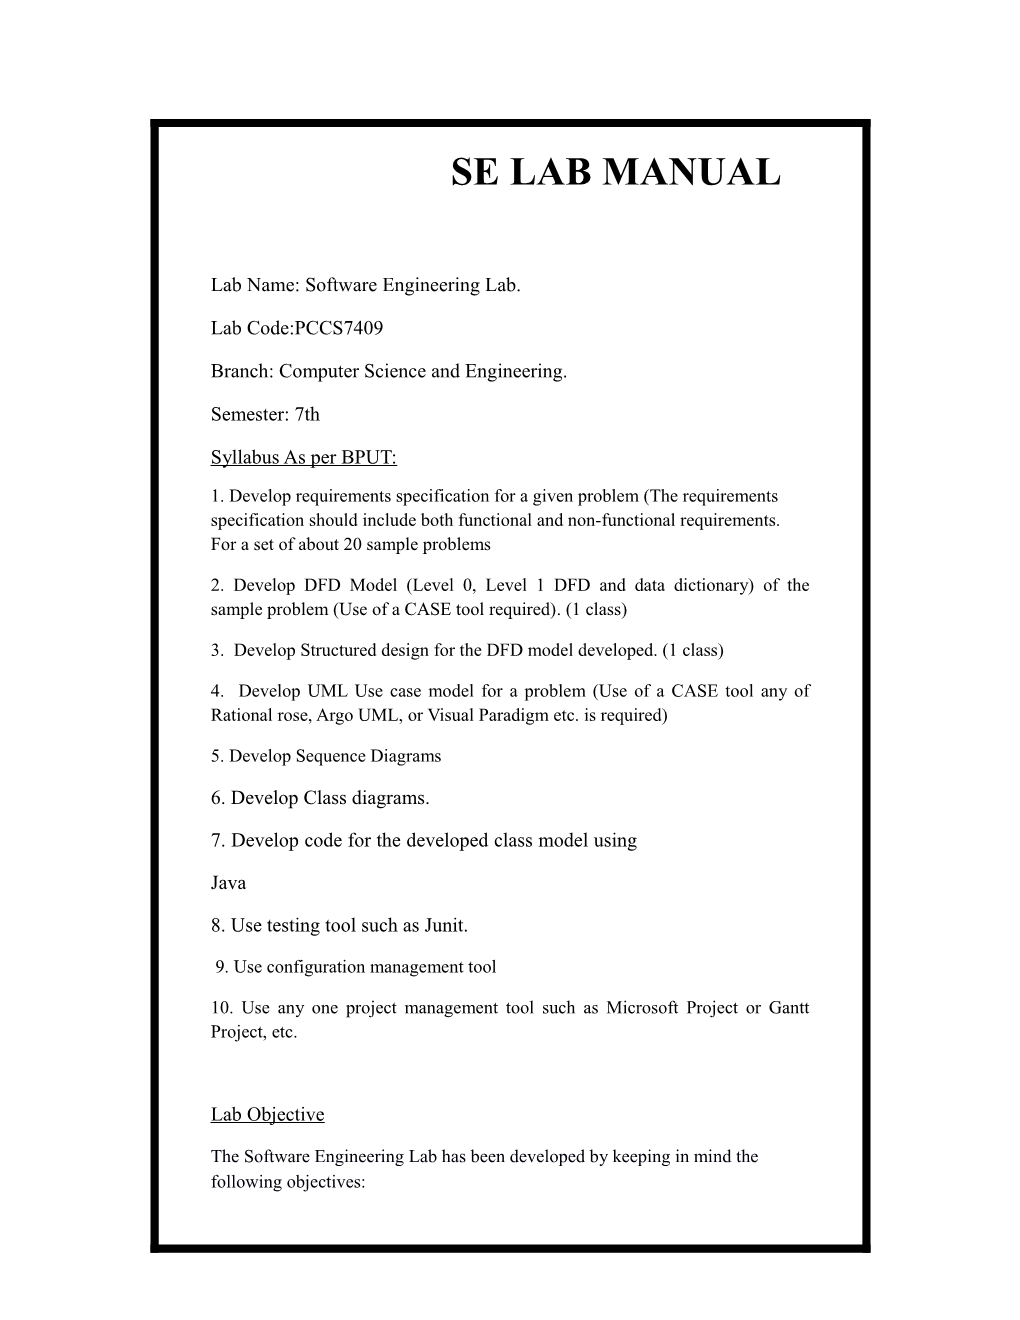 Software Engineering Lab Manual